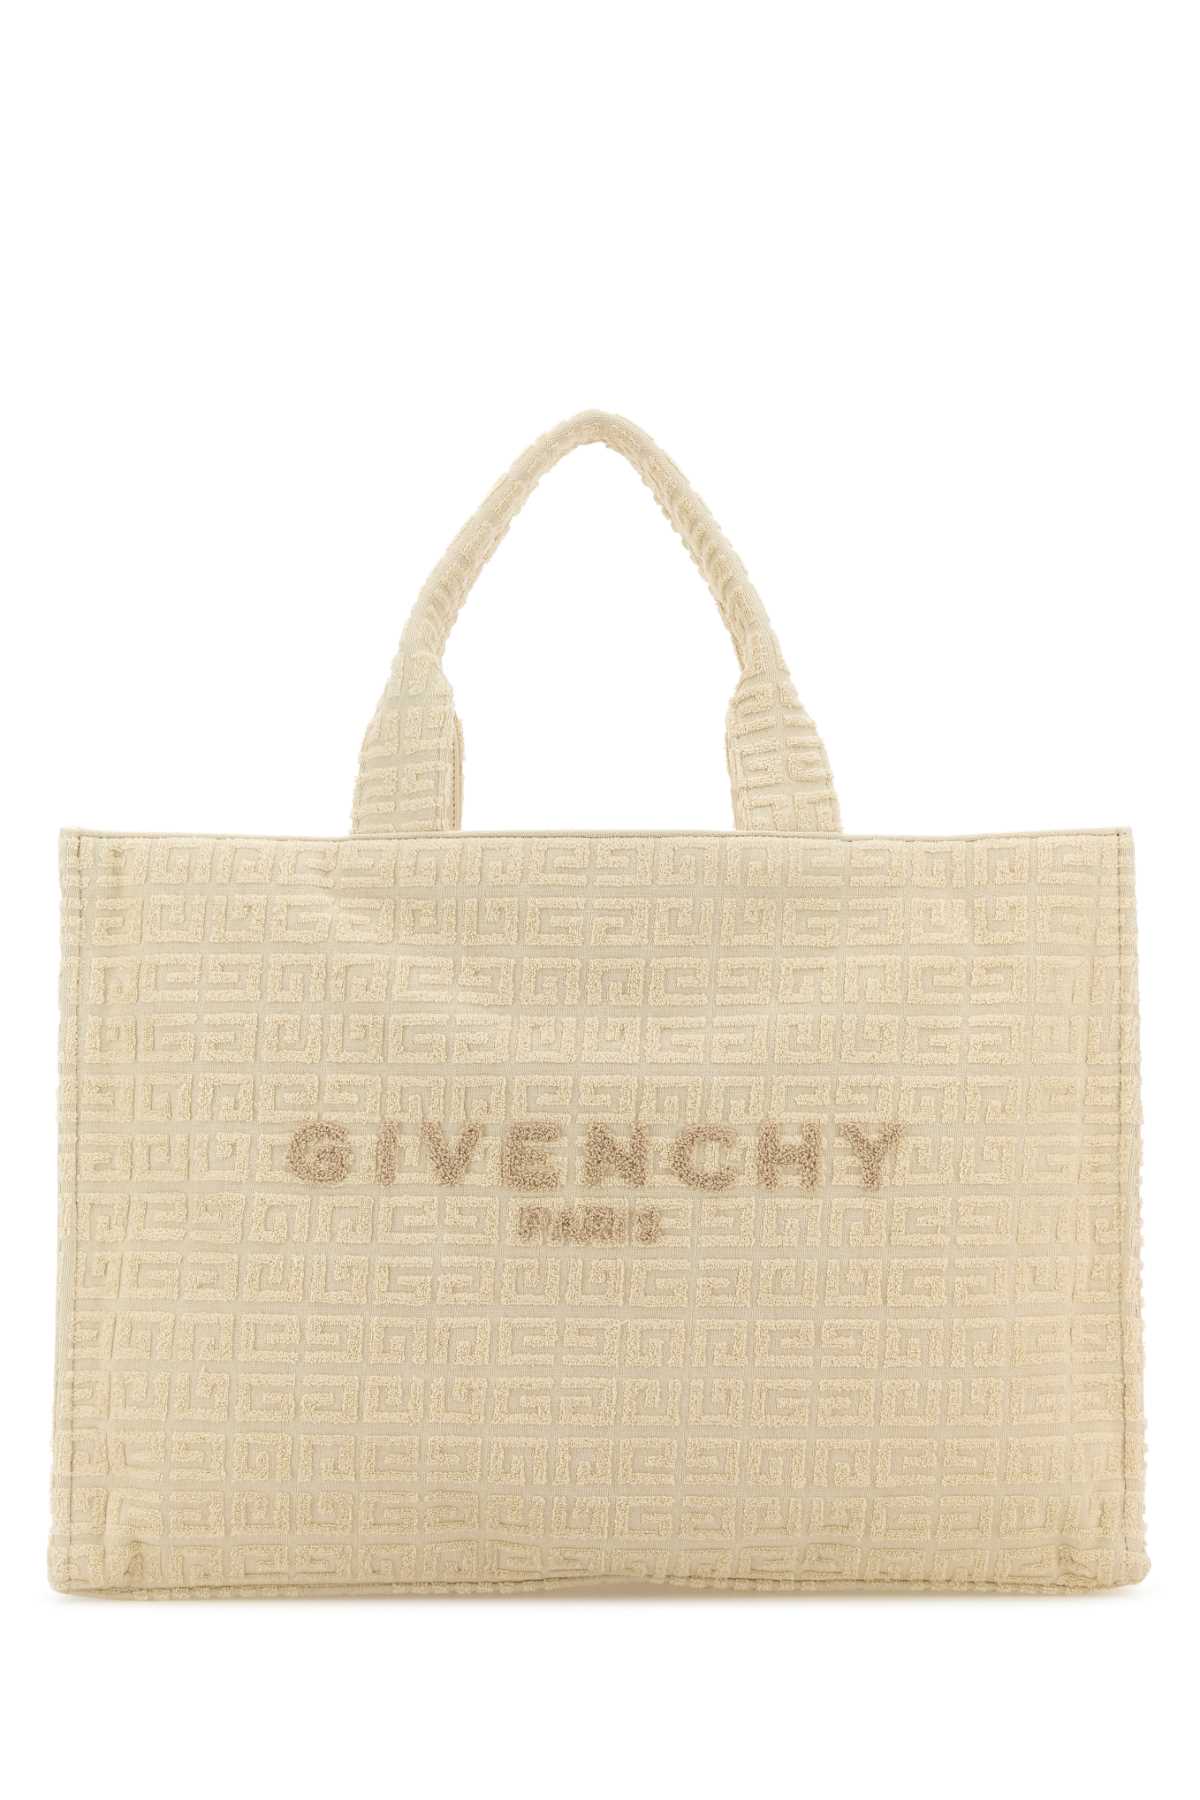 Ivory Terry Fabric Medium G-tote Shopping Bag